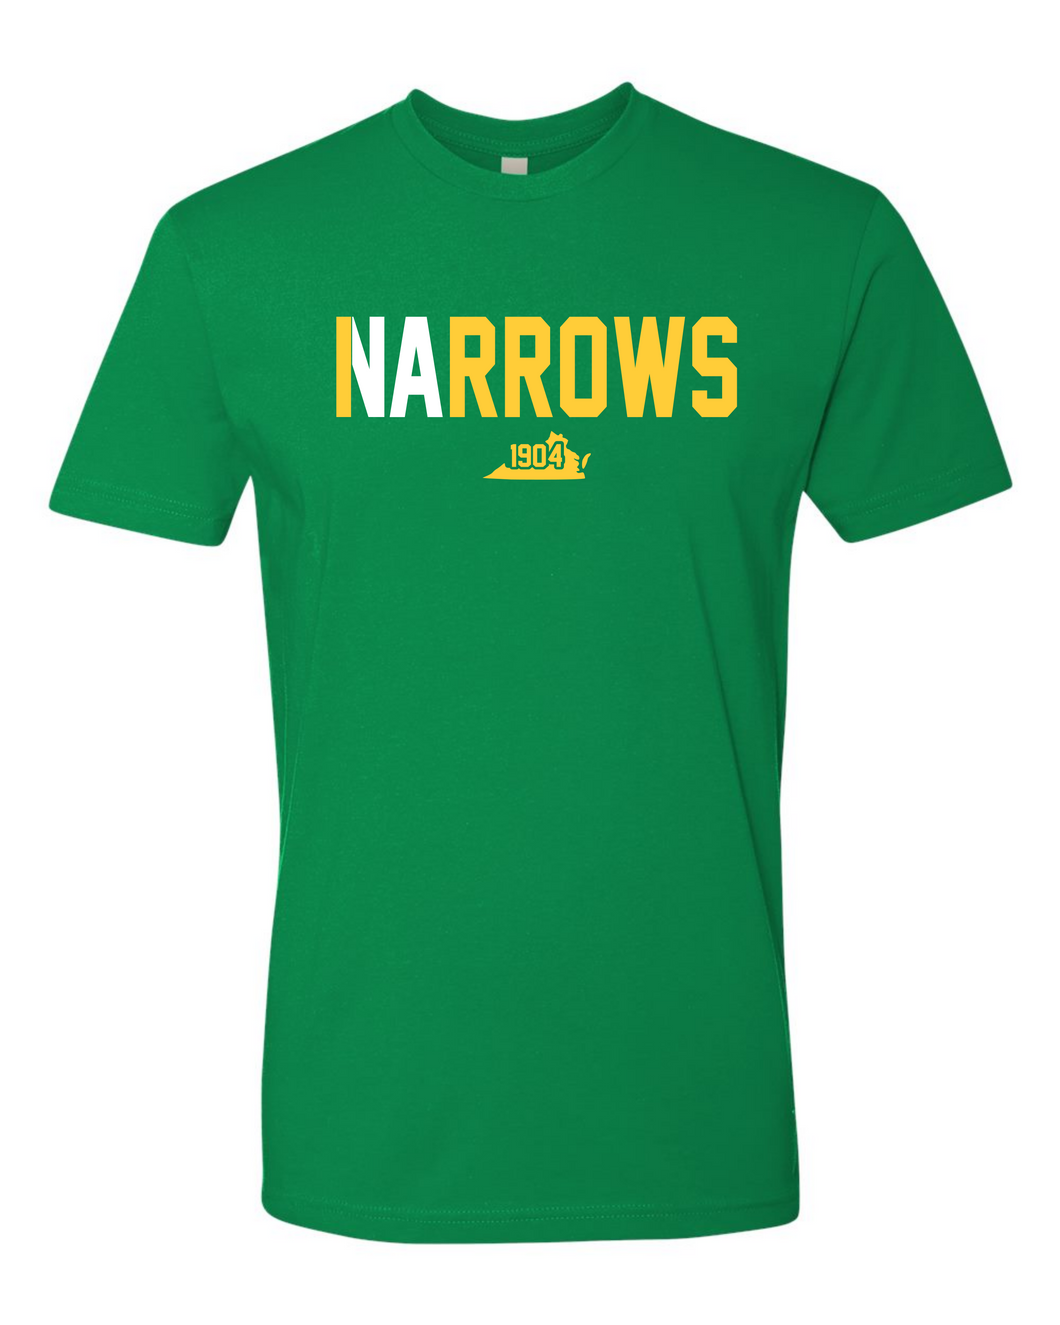 Narrows, VA -1904 Shirt